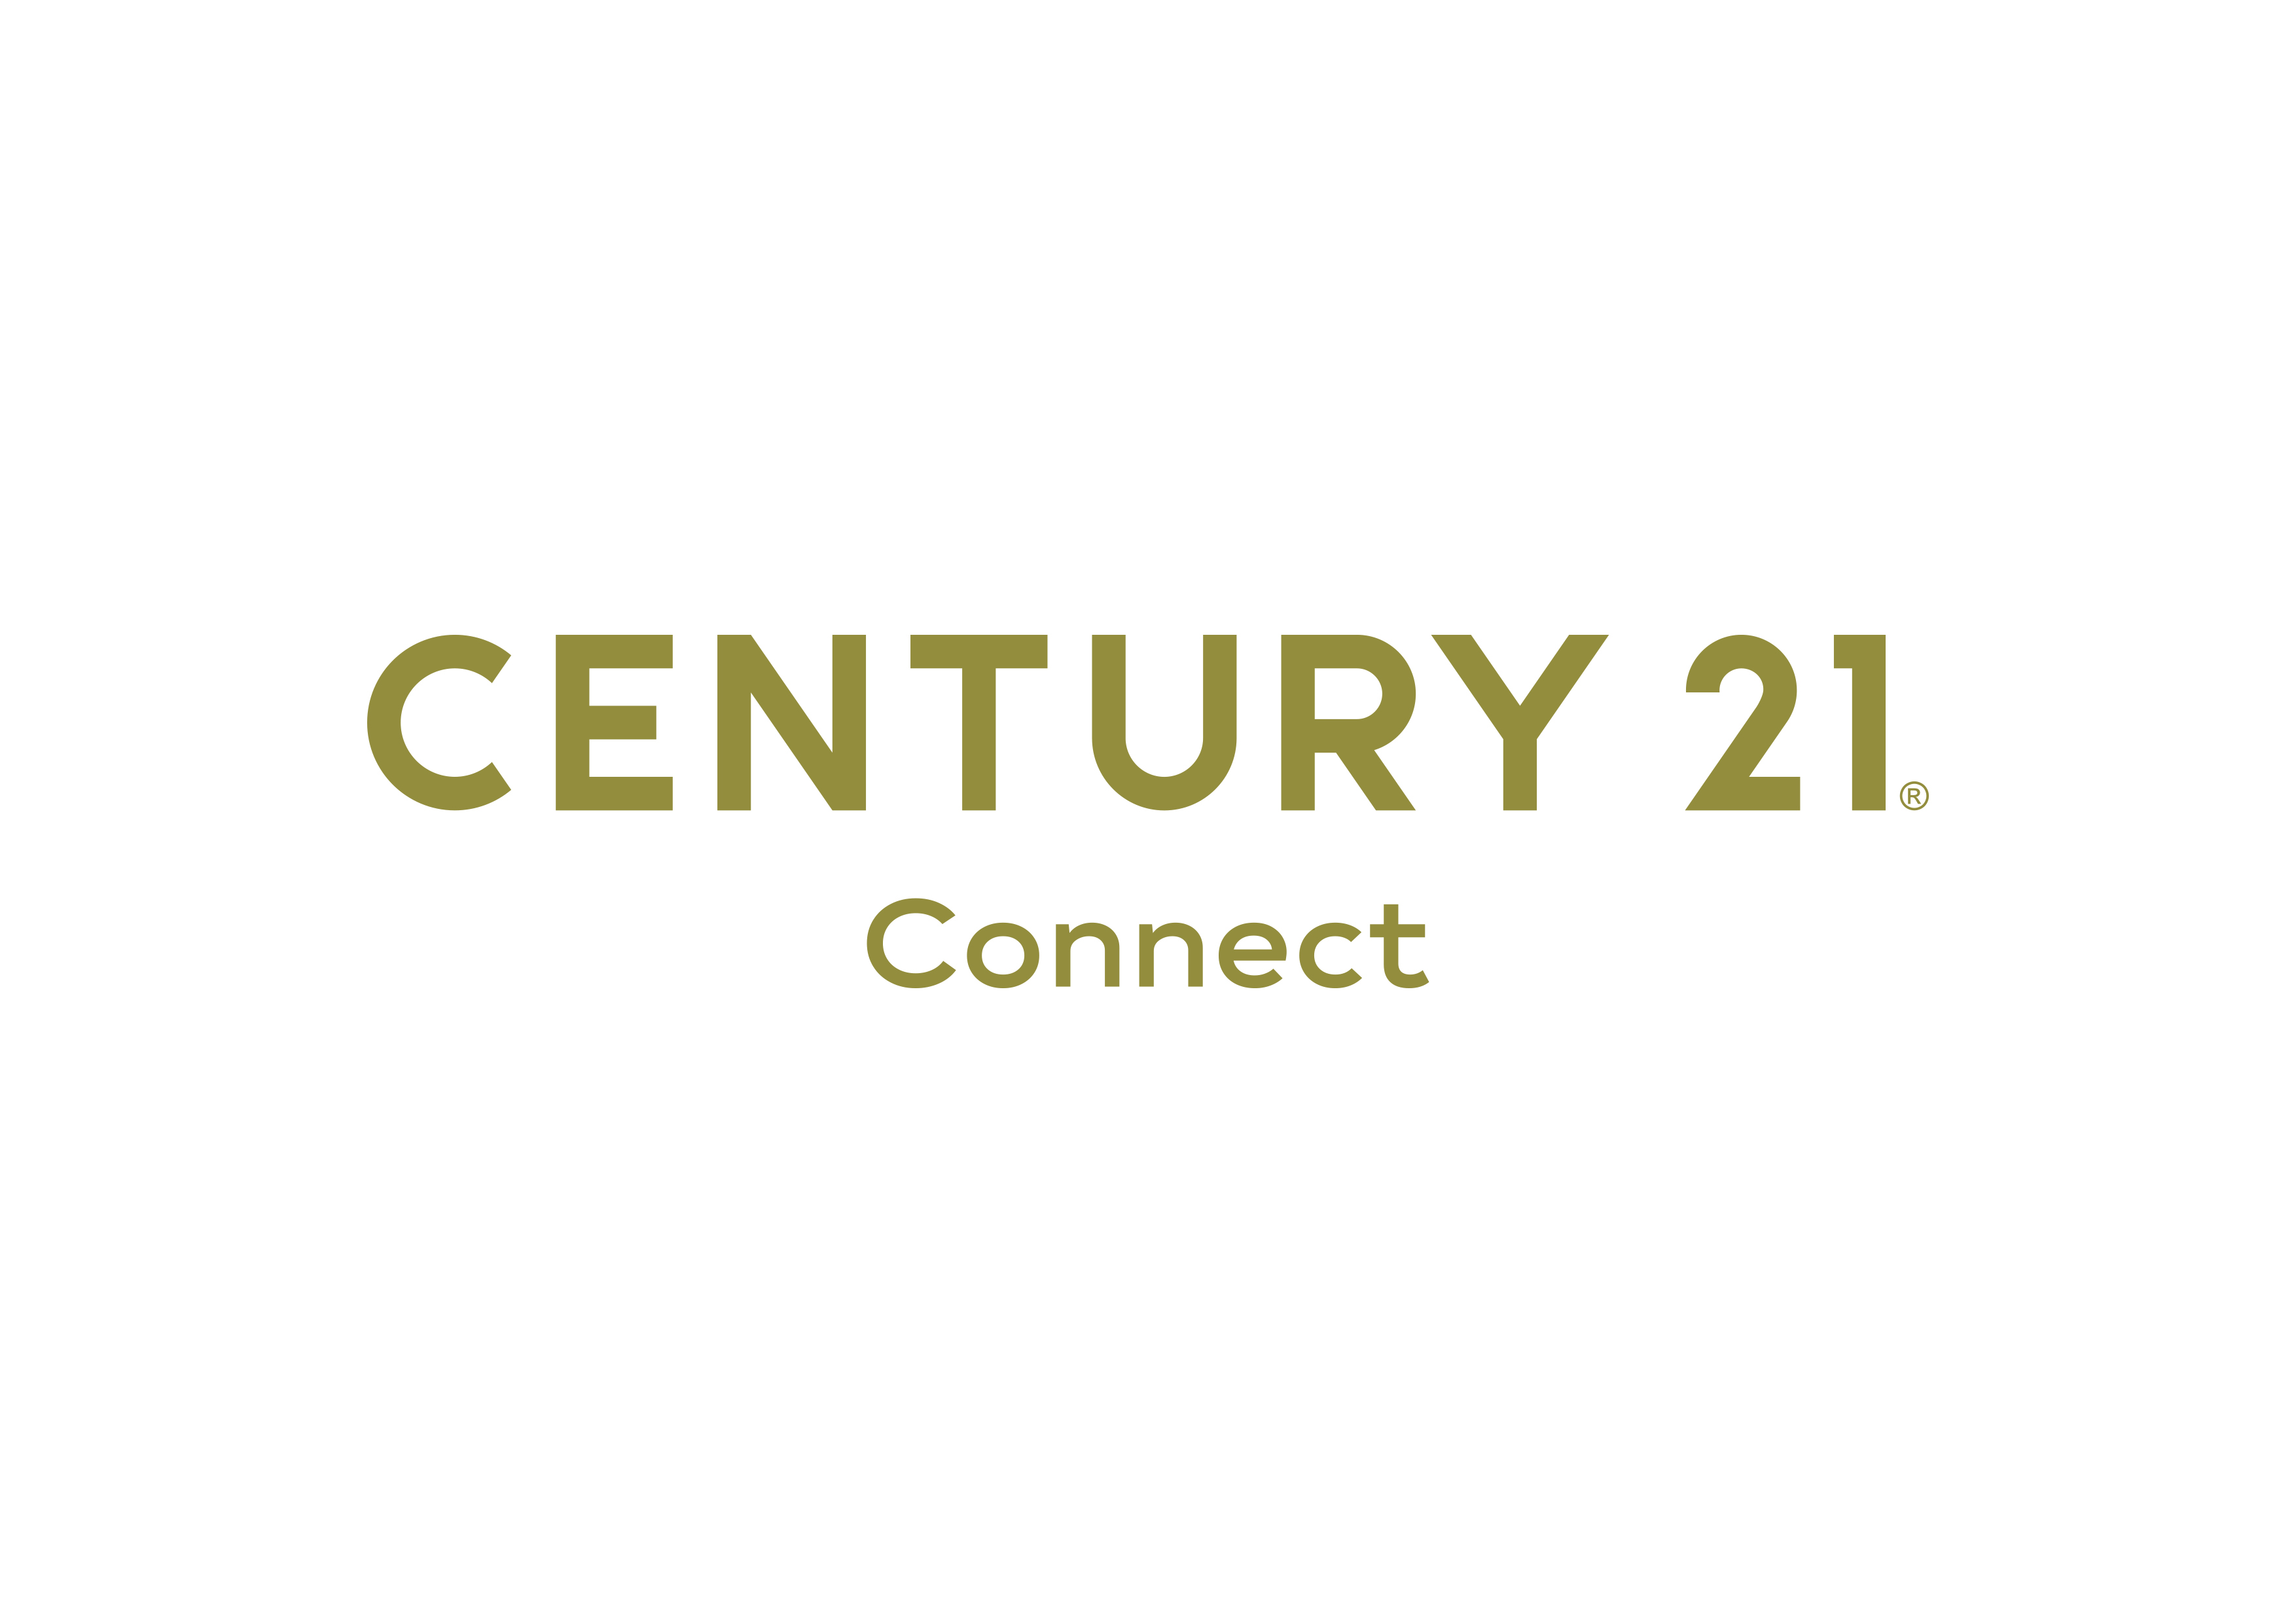 Century 21 Connect